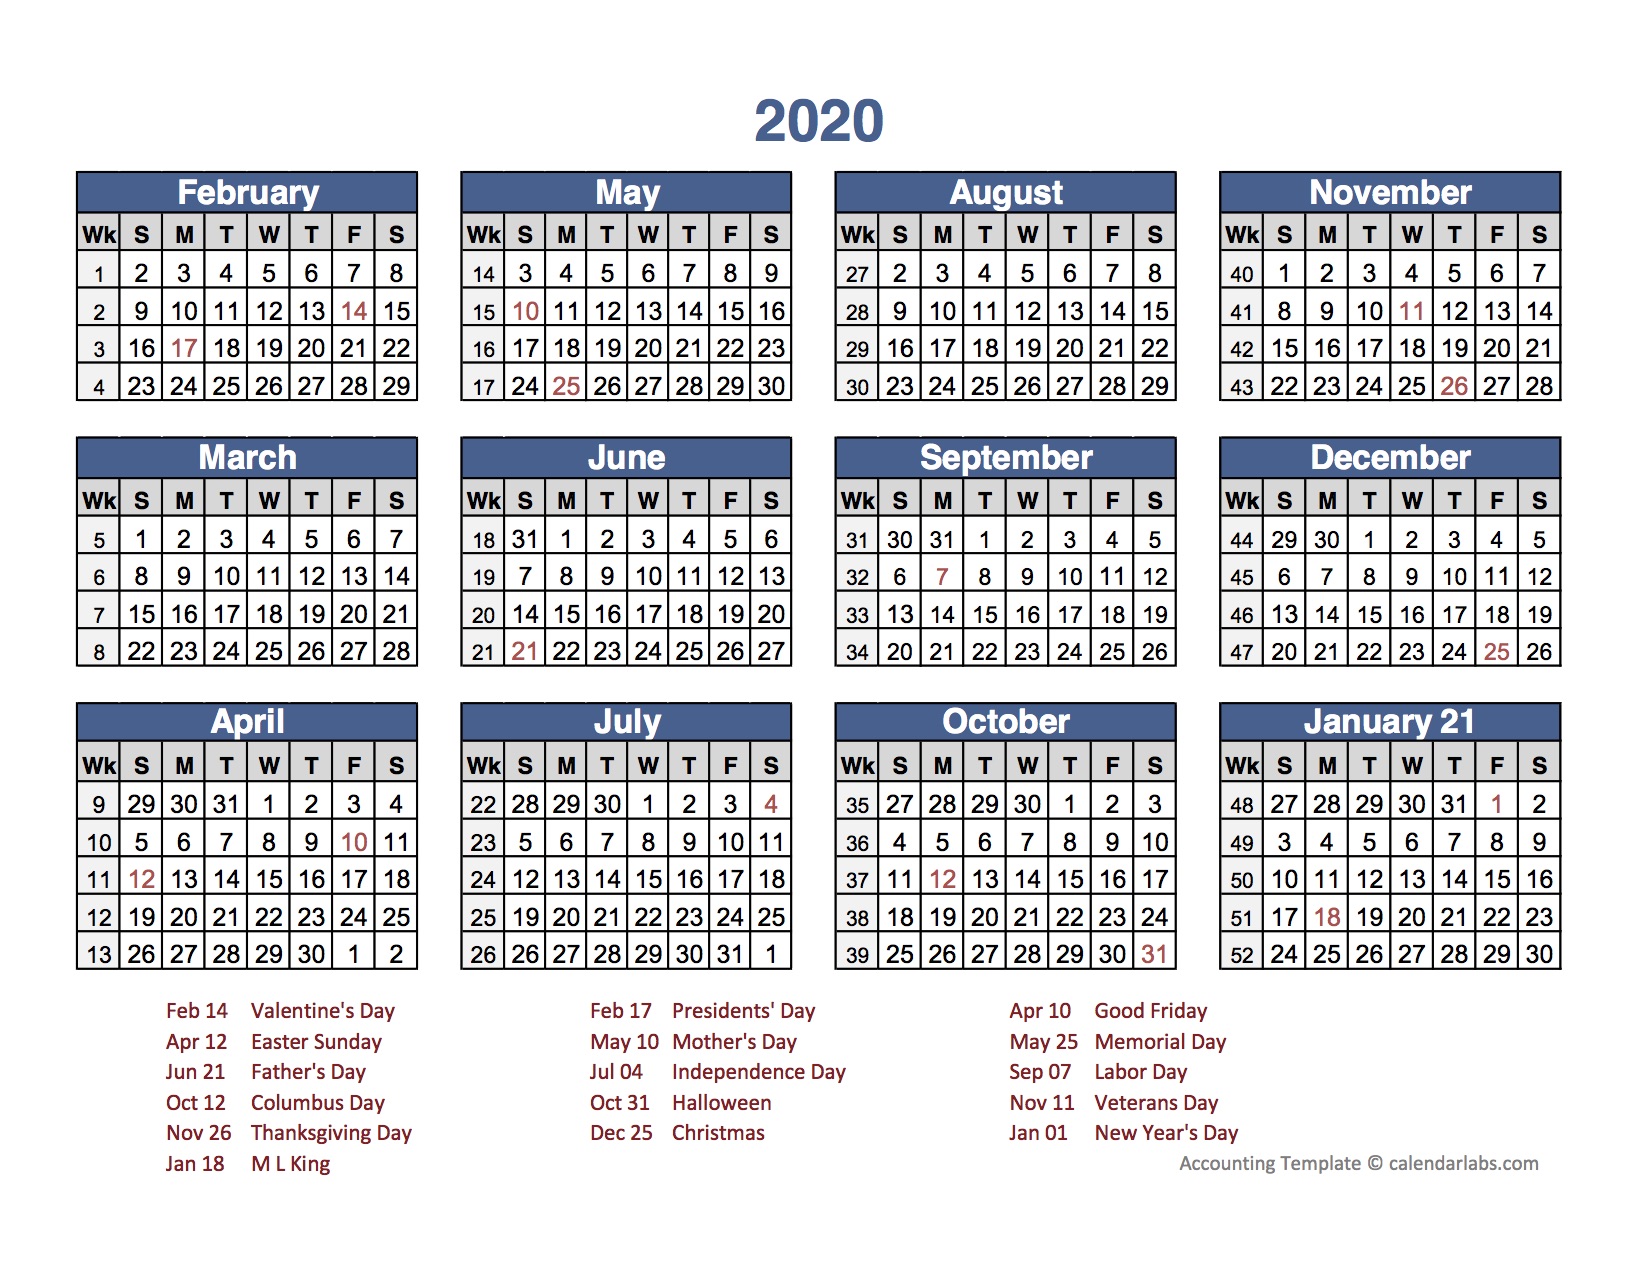 2020 Retail Accounting Calendar 445 Free Printable Templates